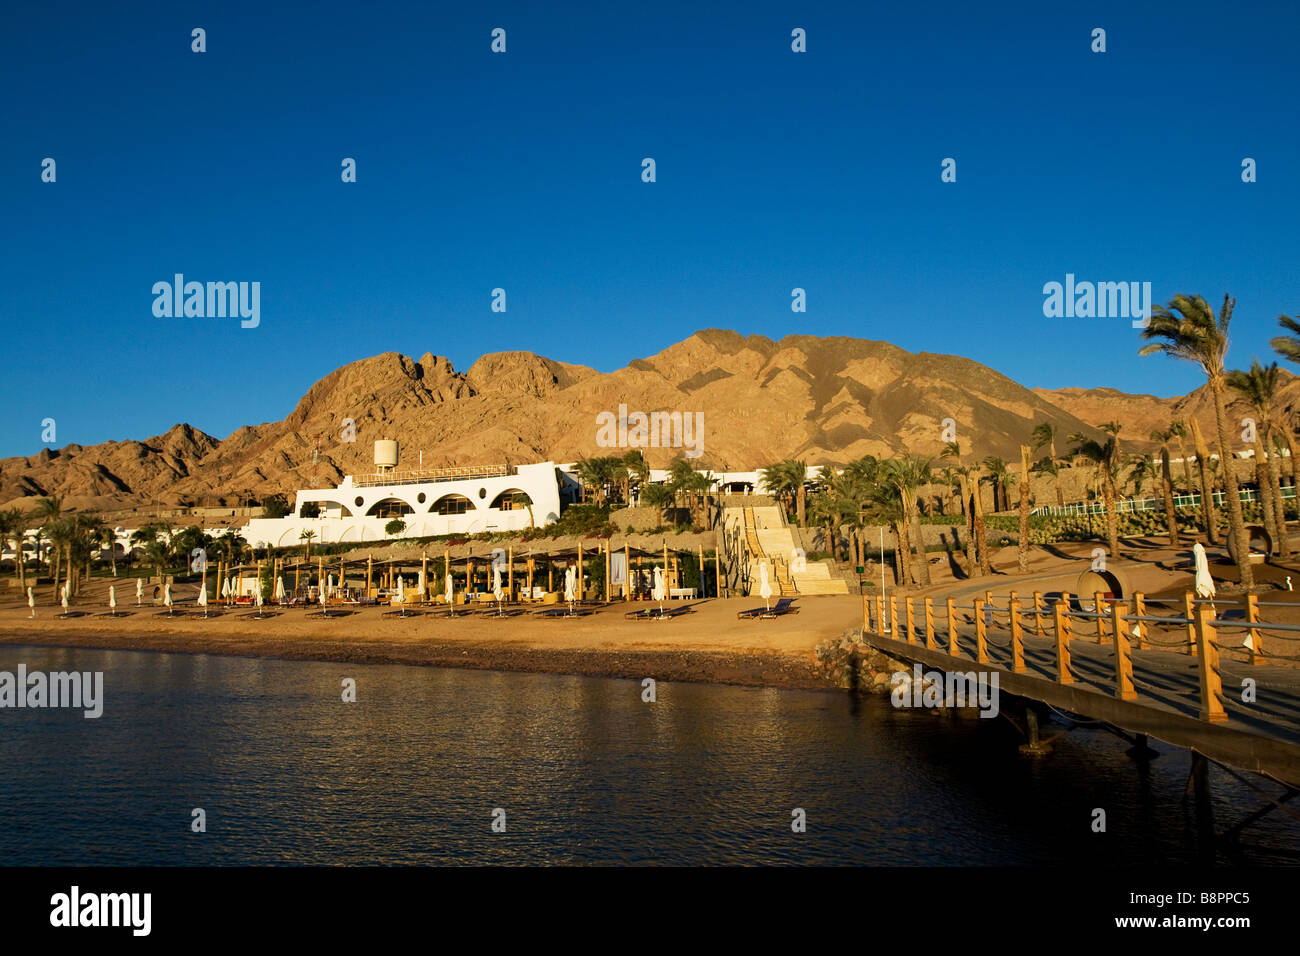 La spiaggia di Le Méridien Hotel & Resort di Dahab, Egitto Foto Stock